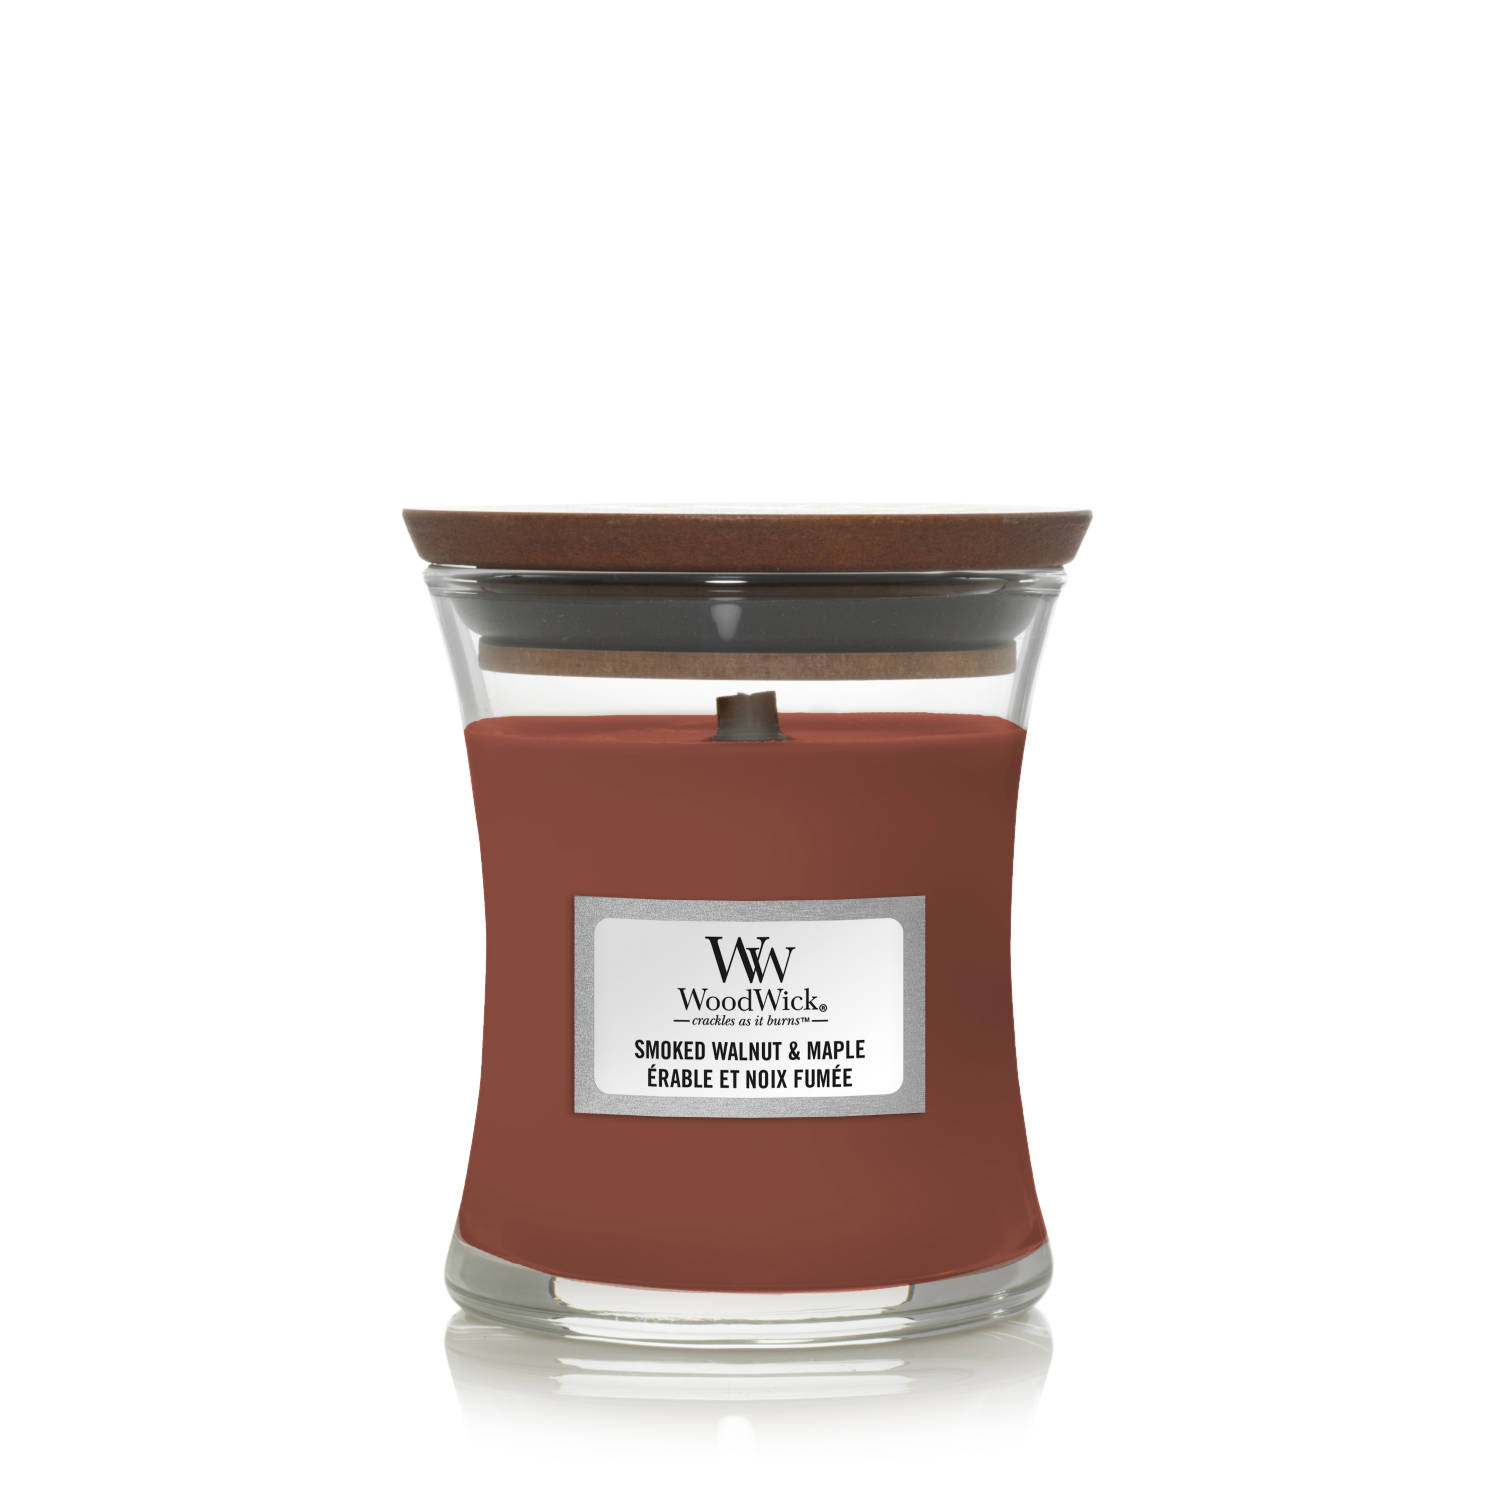 Woodwick WW Smoked Walnut & Maple Mini Candle